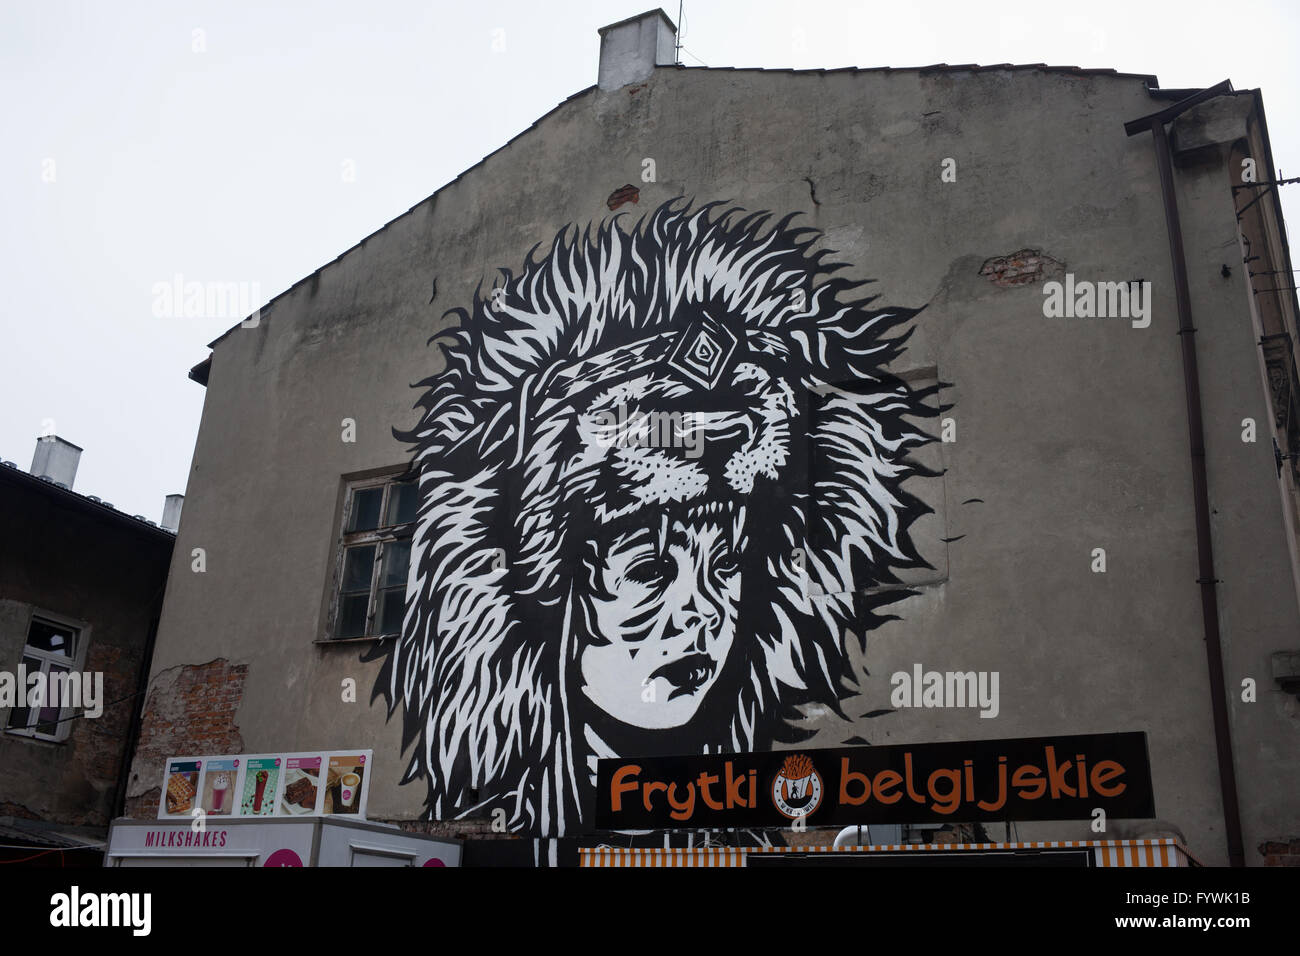 Judah graffiti, mural, street art in Kazimierz, city of Krakow, Poland, old Jewish Quarter, district Stock Photo